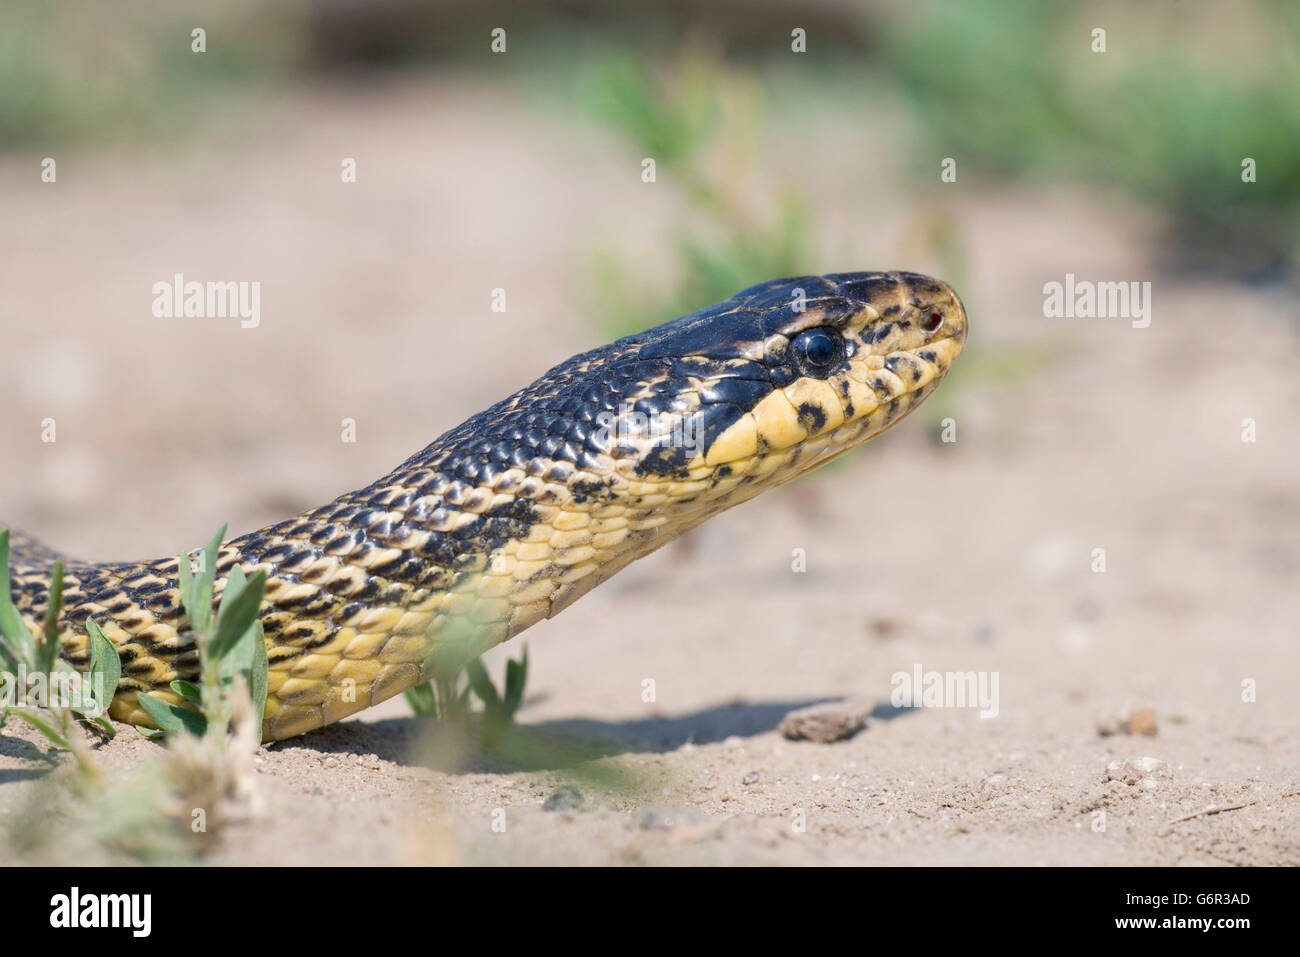 Four-lined Snake, Bulgaria / (Elaphe quatuorlineata) Stock Photo